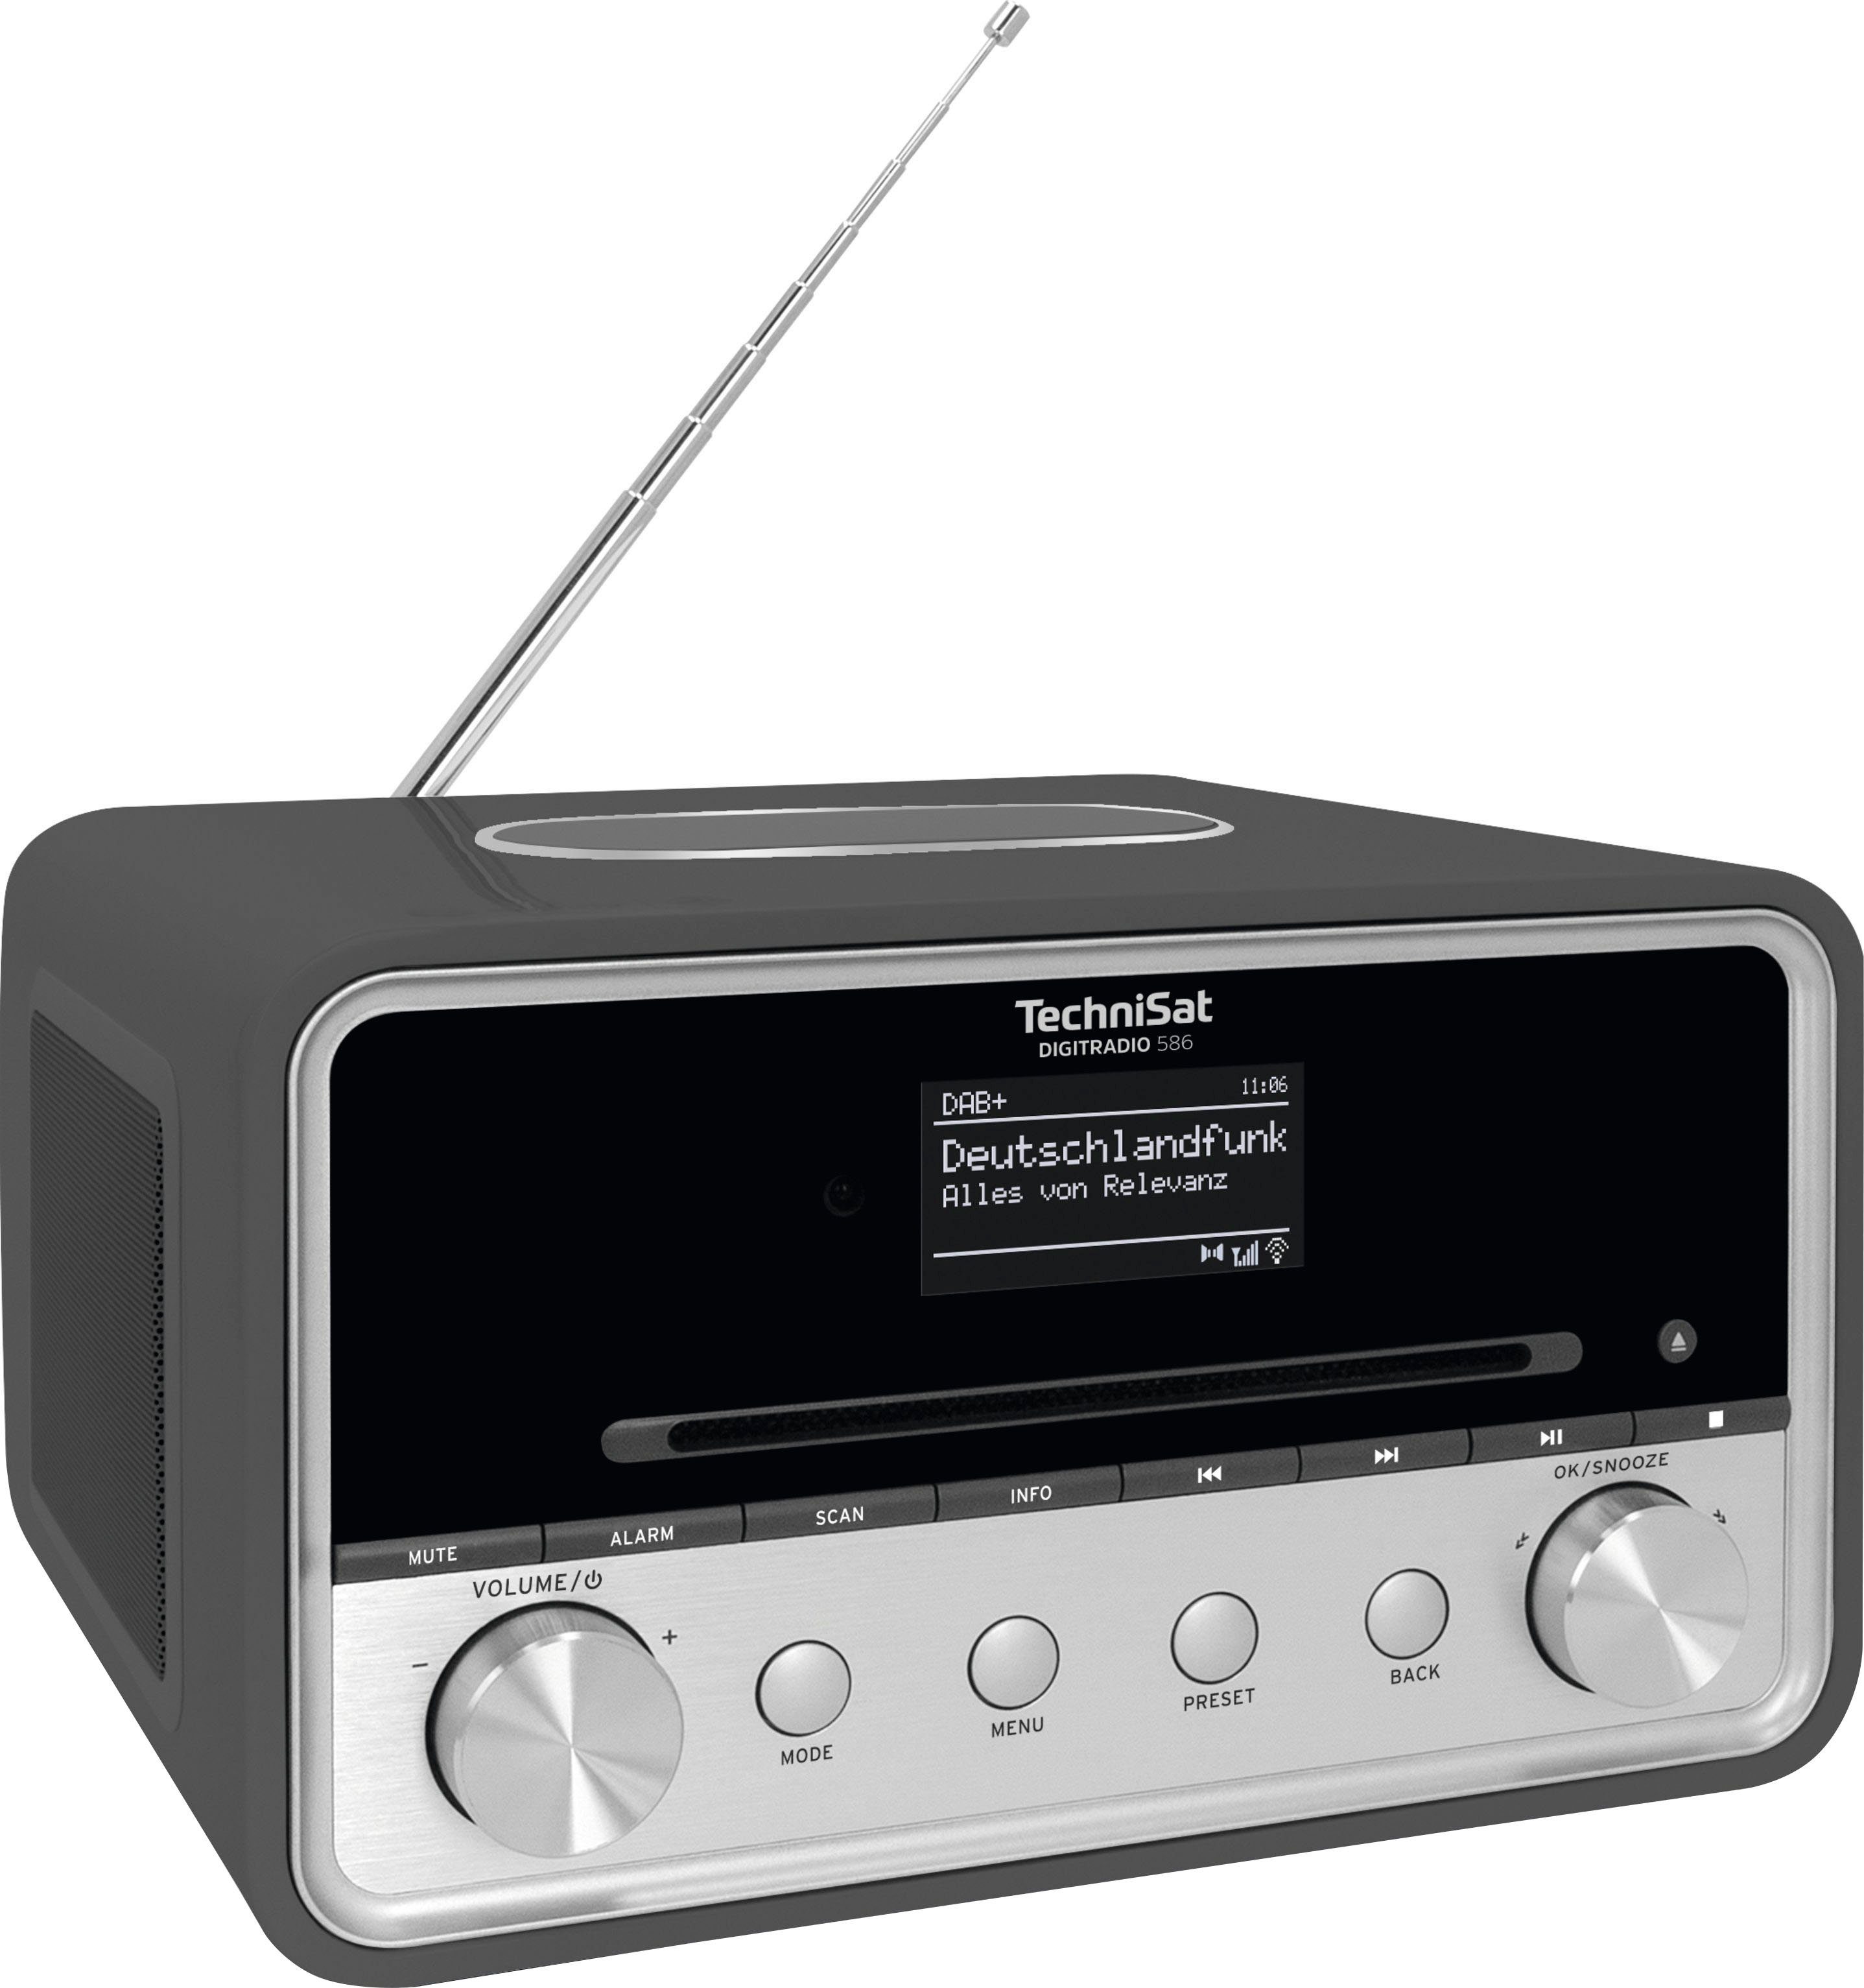 DIGITRADIO UKW W) Radio 586 Anthrazit Internetradio, RDS, 20 TechniSat mit (DAB), (Digitalradio